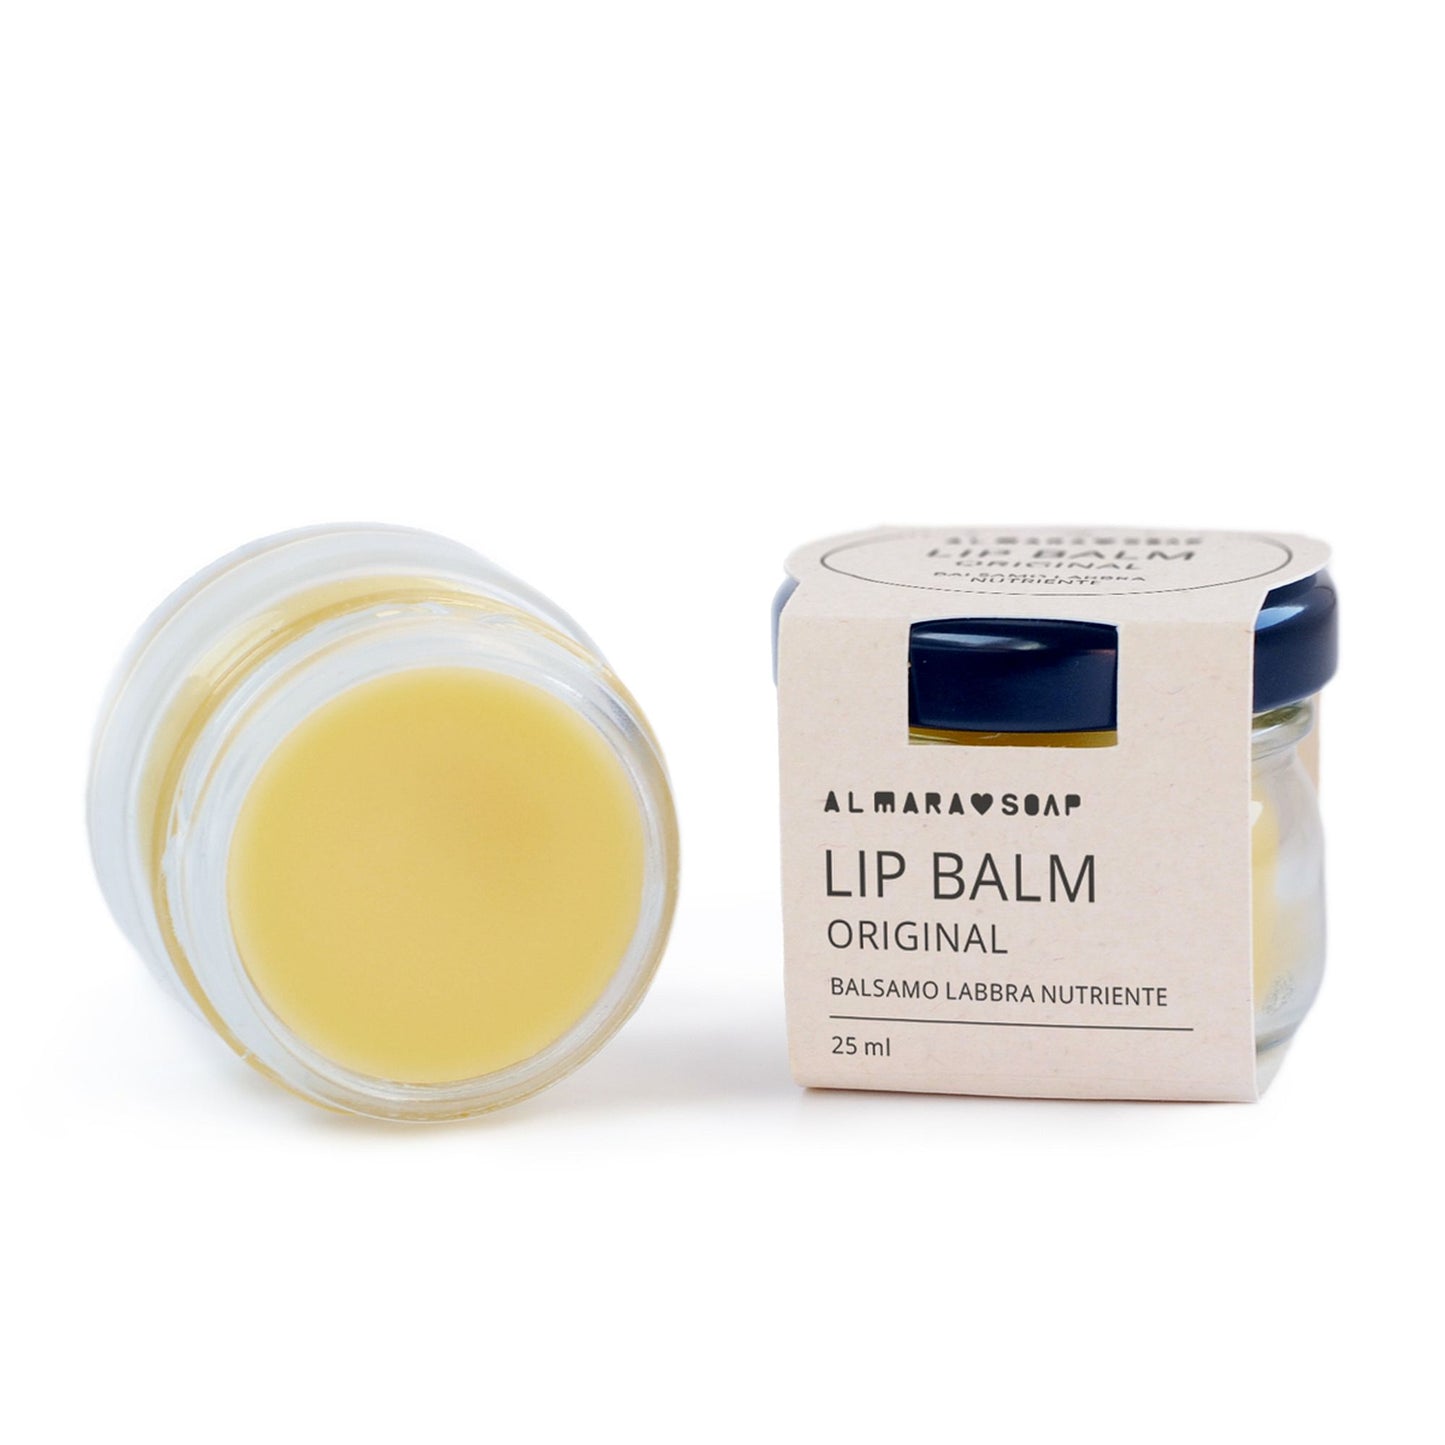 Balsamo labbra Lip Balm Original - Almara Soap